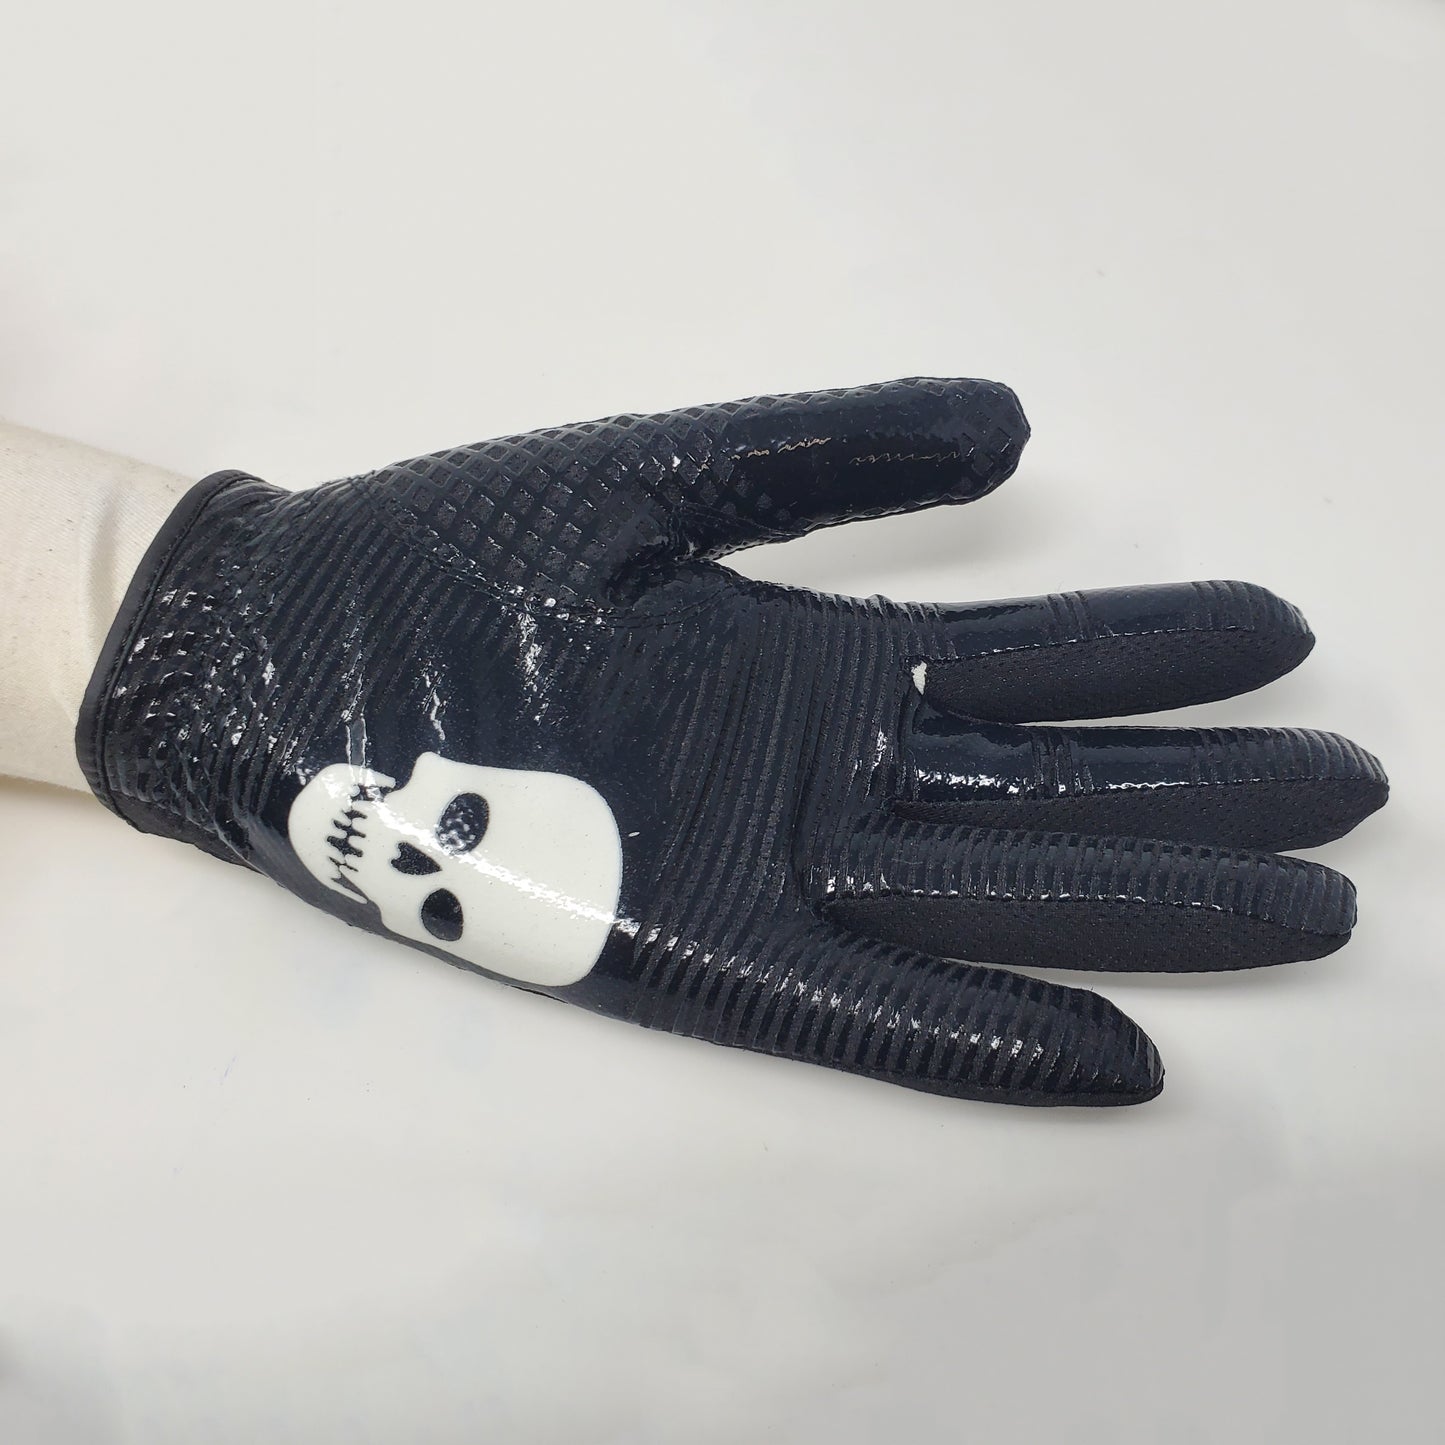 XEIR PRO Men's Death Grip Golf Gloves (2 Pack)